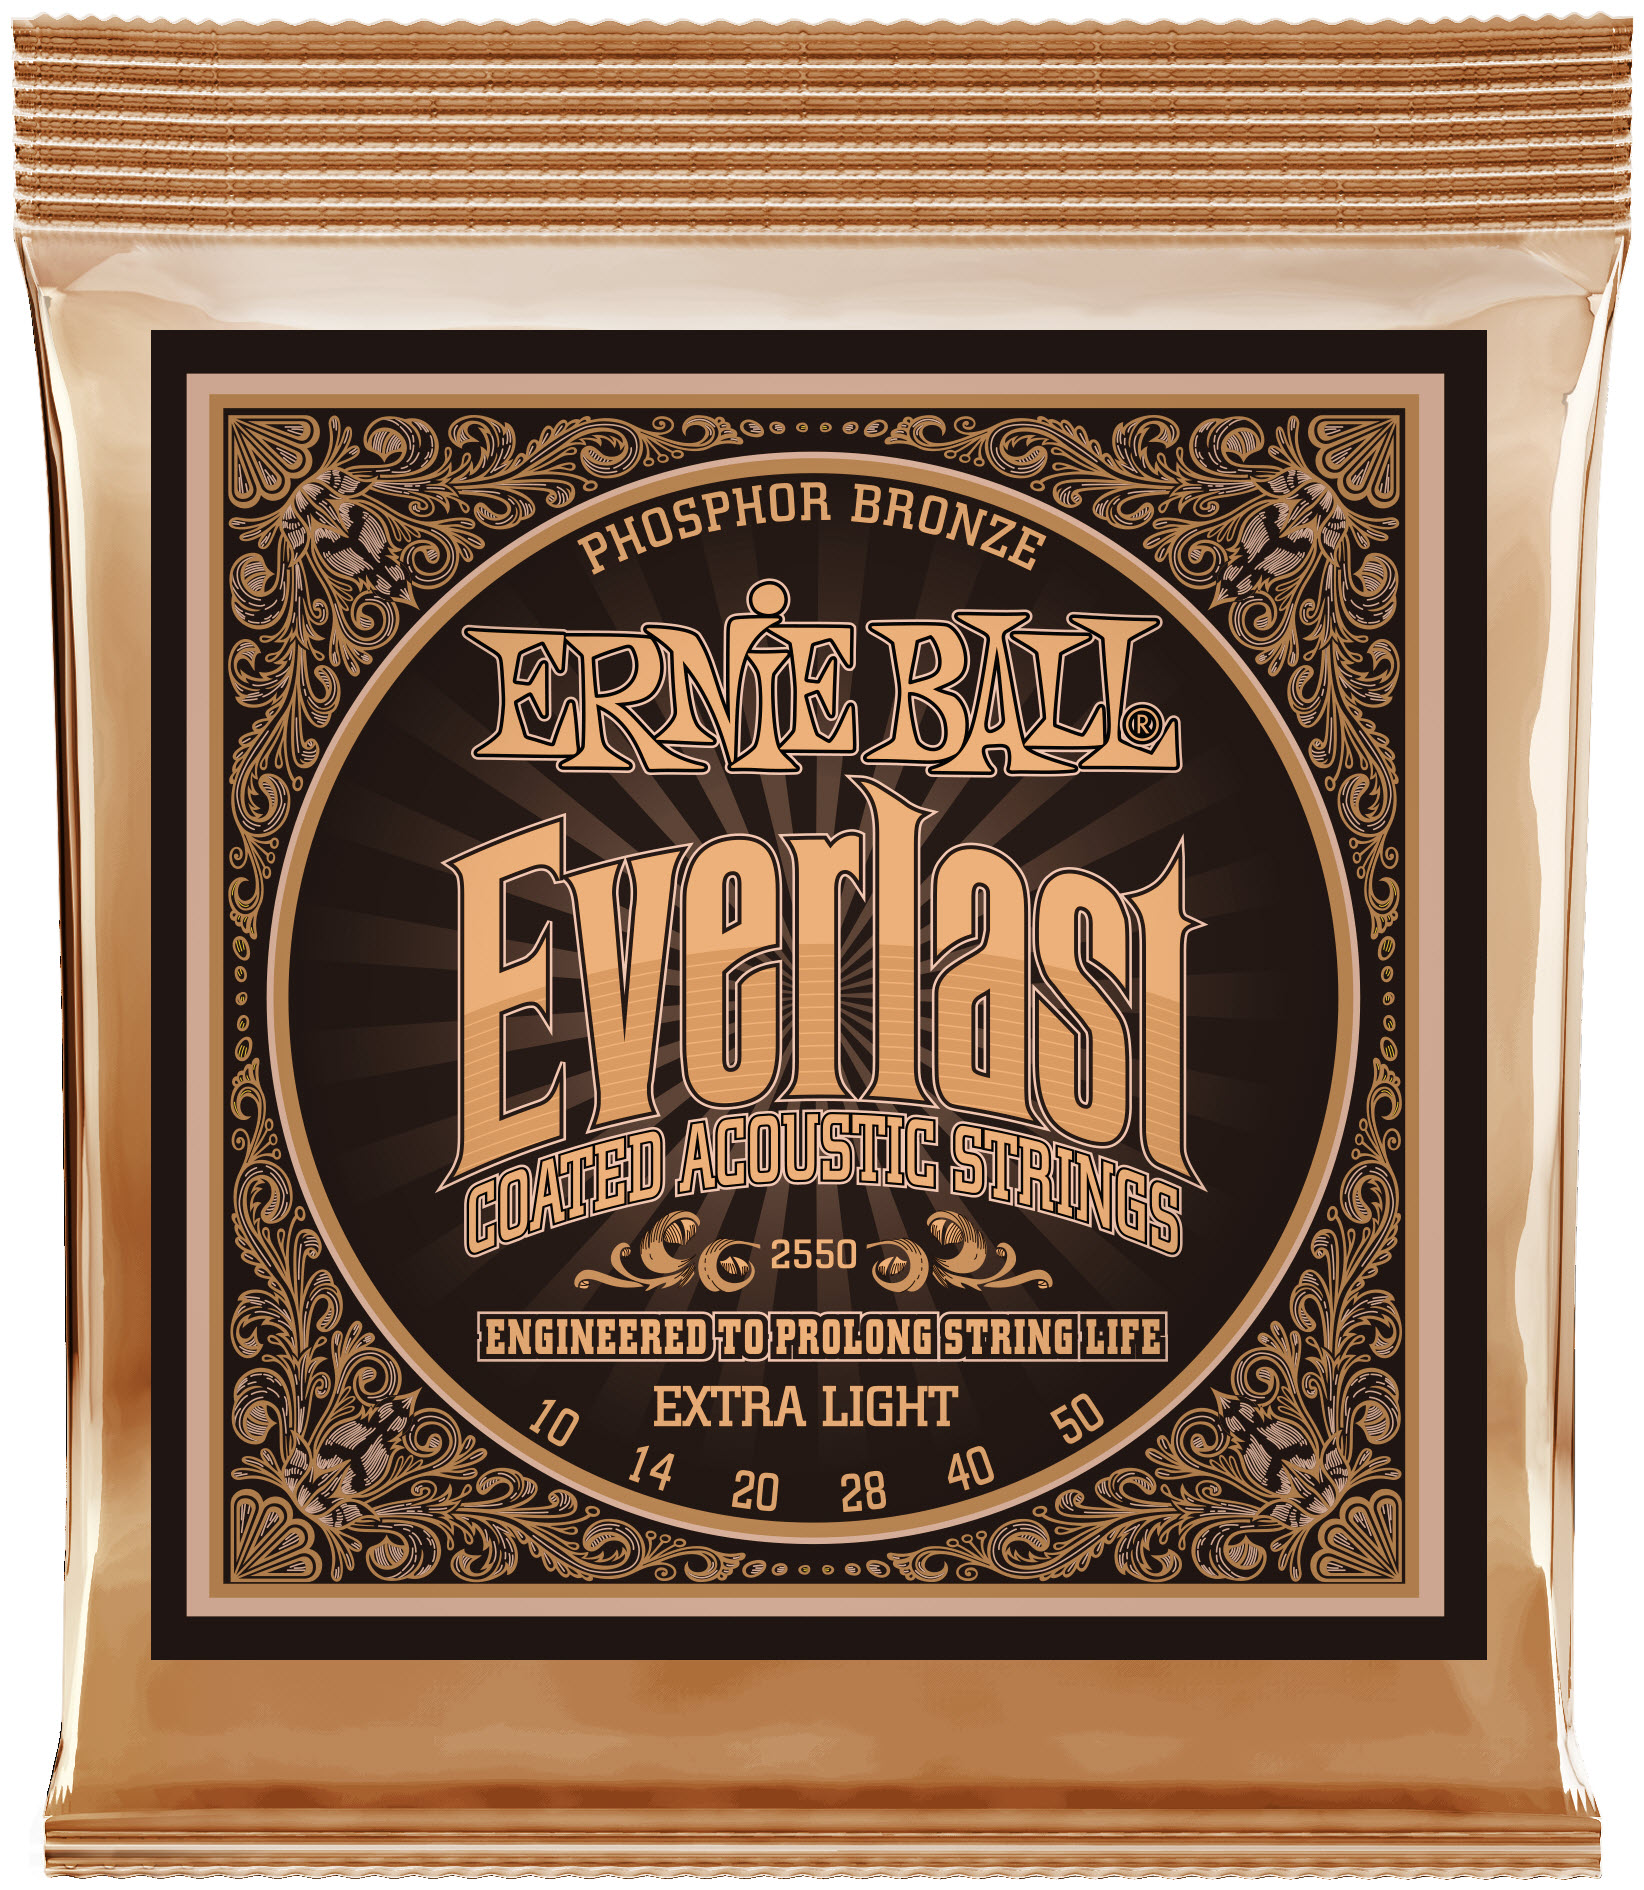 Ernie Ball Everlast Phosphor Bronze Extra Light 10-50